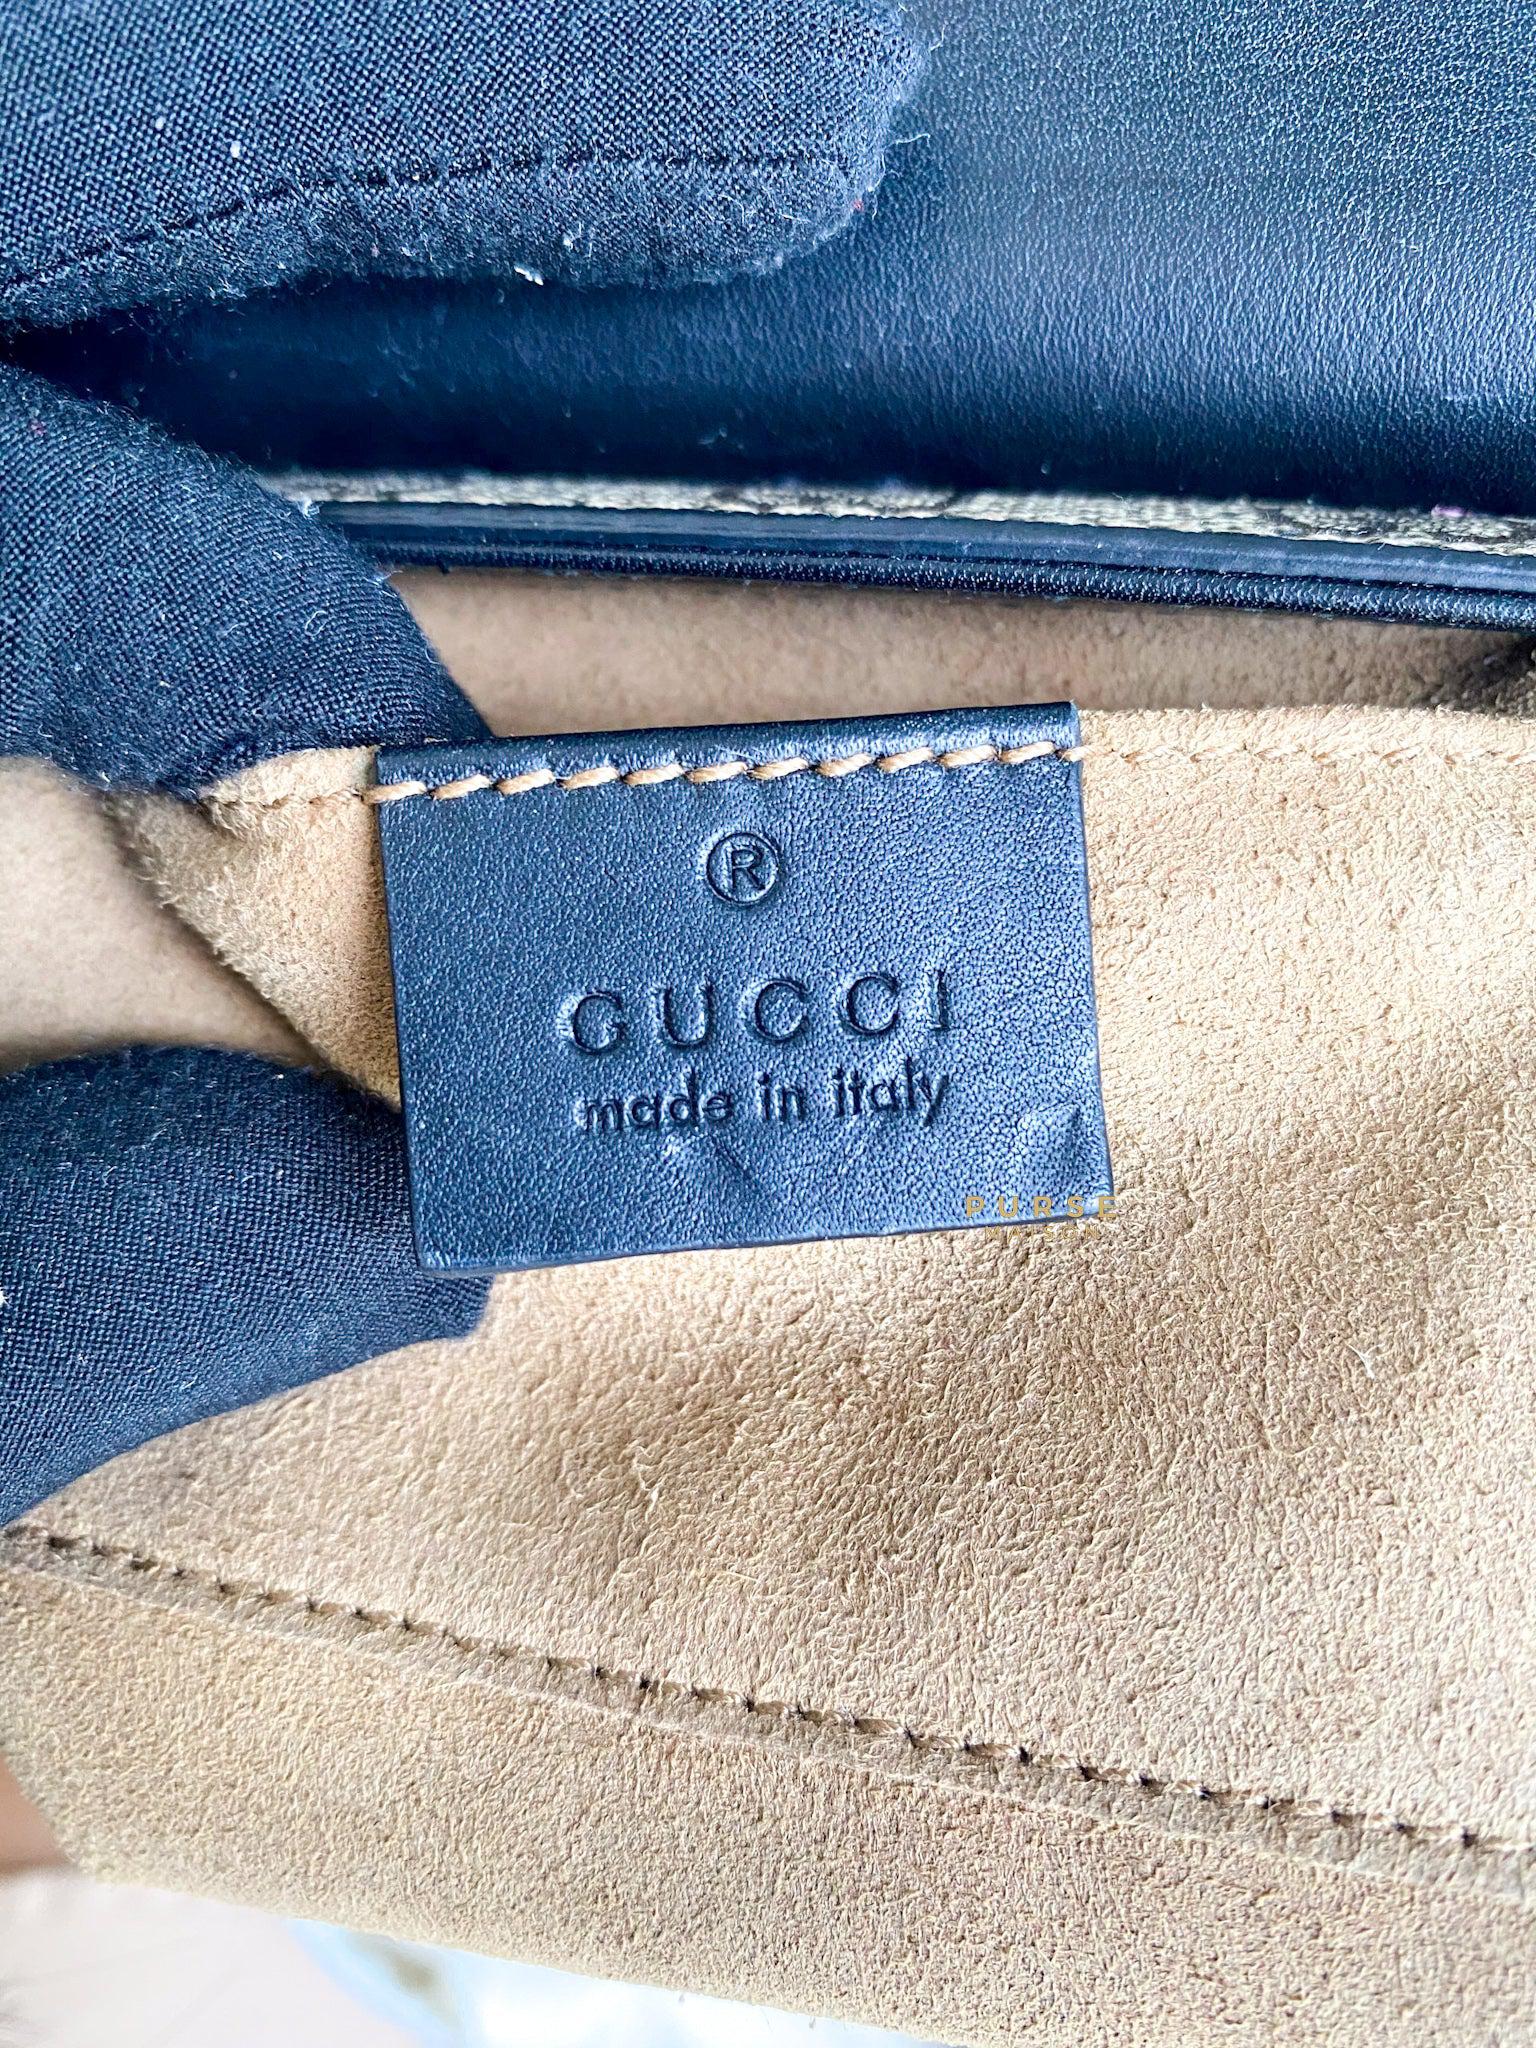 Gucci Mini Padlock Chain Bag